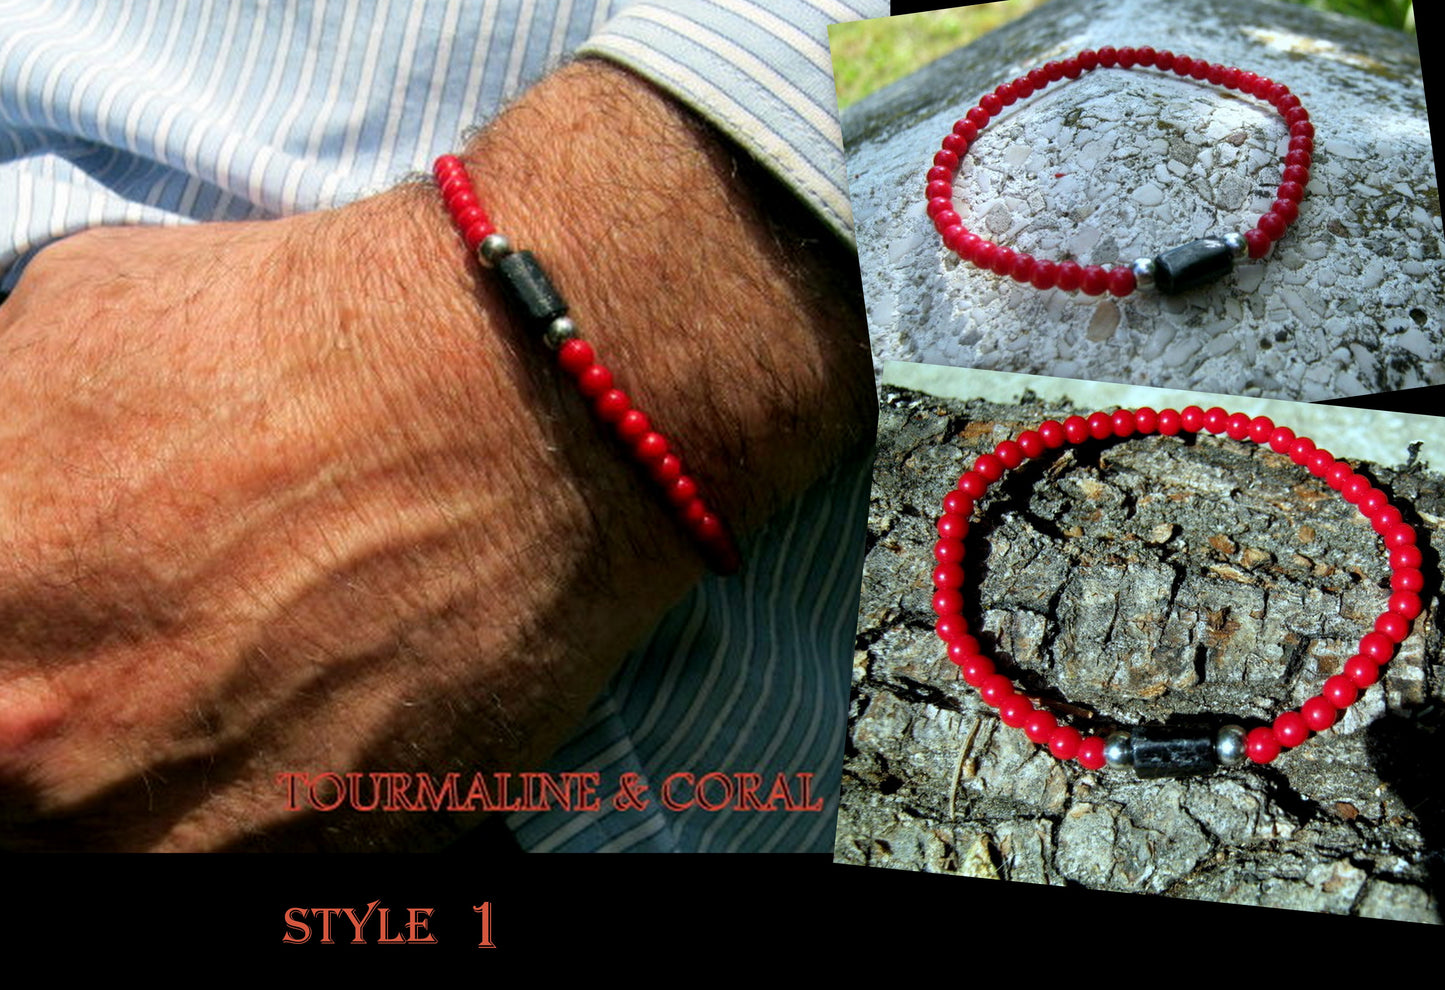 Men bracelet tiny gemstones-Coral Tourmaline Onyx Spinel black Diamonds, silver st 925, protection mantra stone handmade slim bracelet men gift